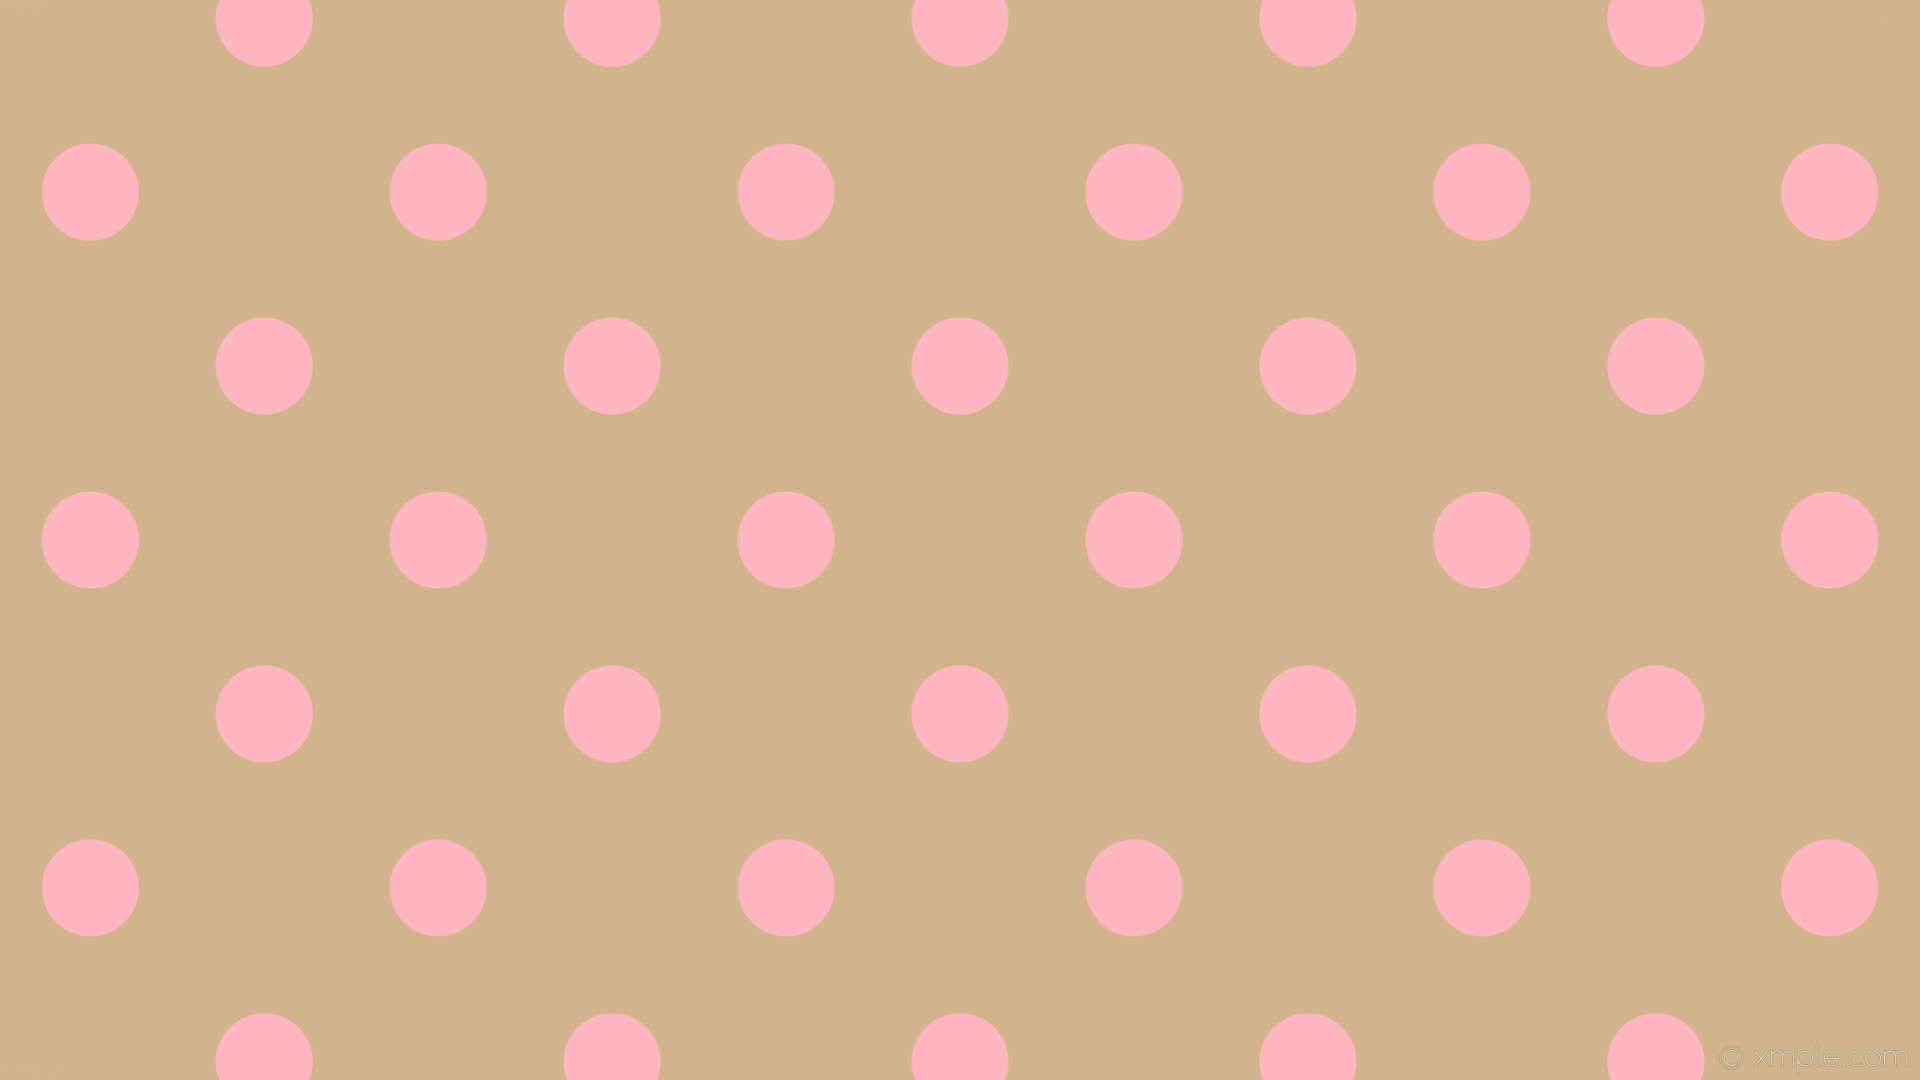 1920x1080 wallpaper pink dots brown polka spots tan light pink d2b48c ffb6c1 315a‚a